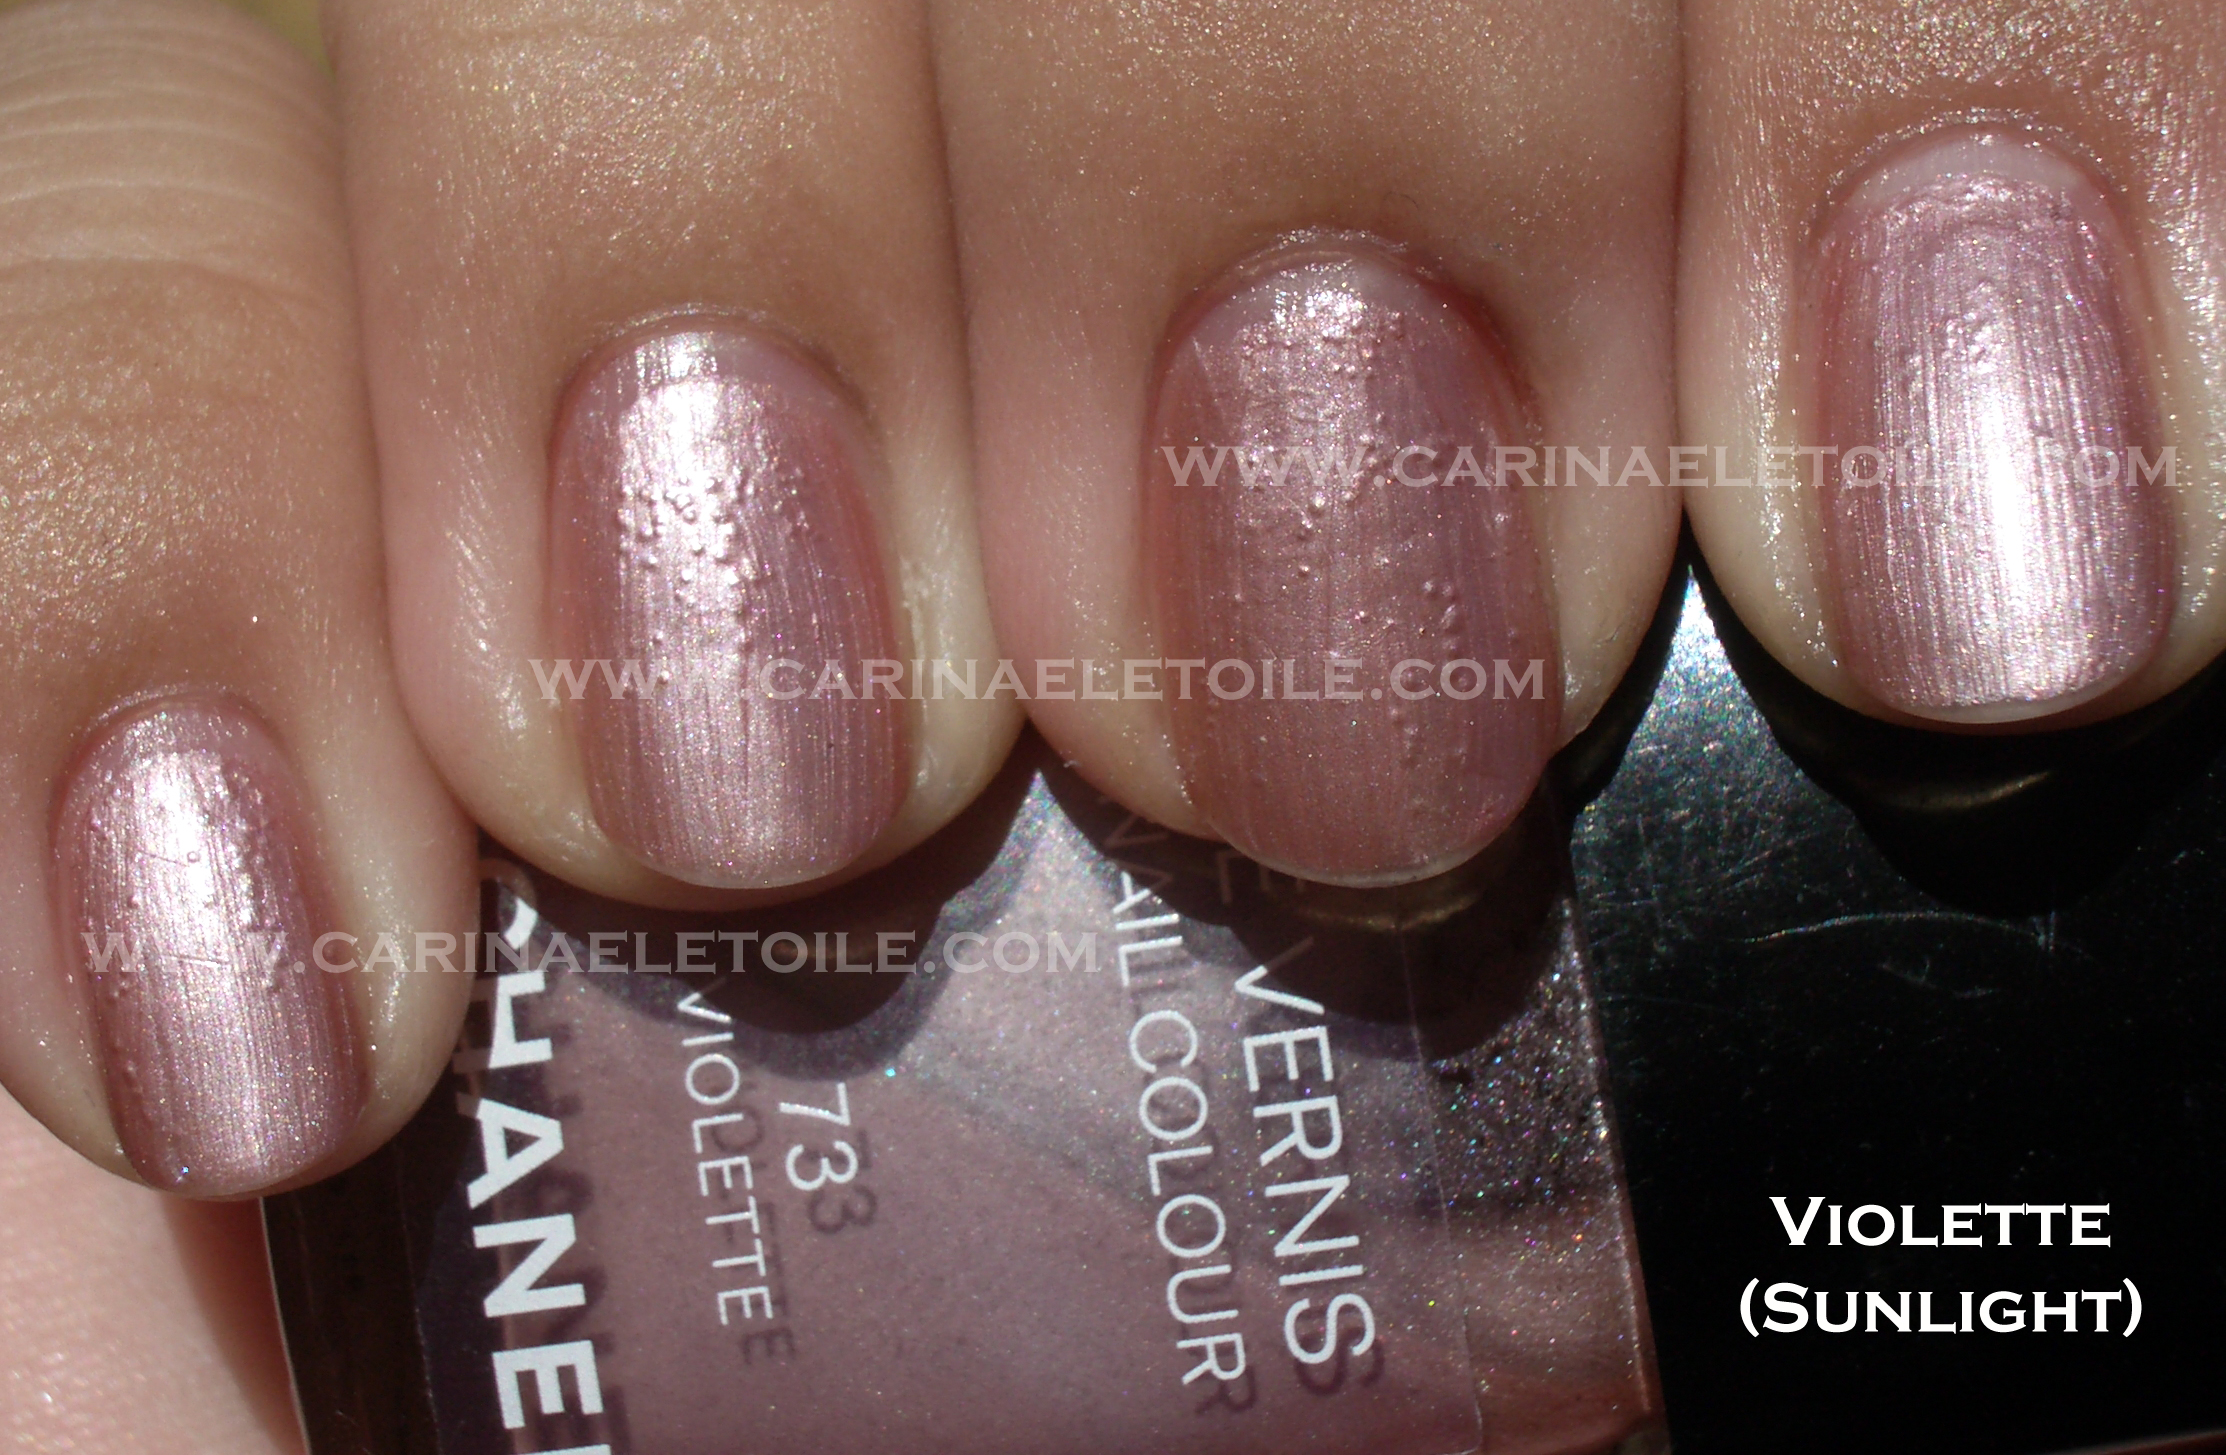 Chanel – Violette  Carinae L'etoile's polish stash